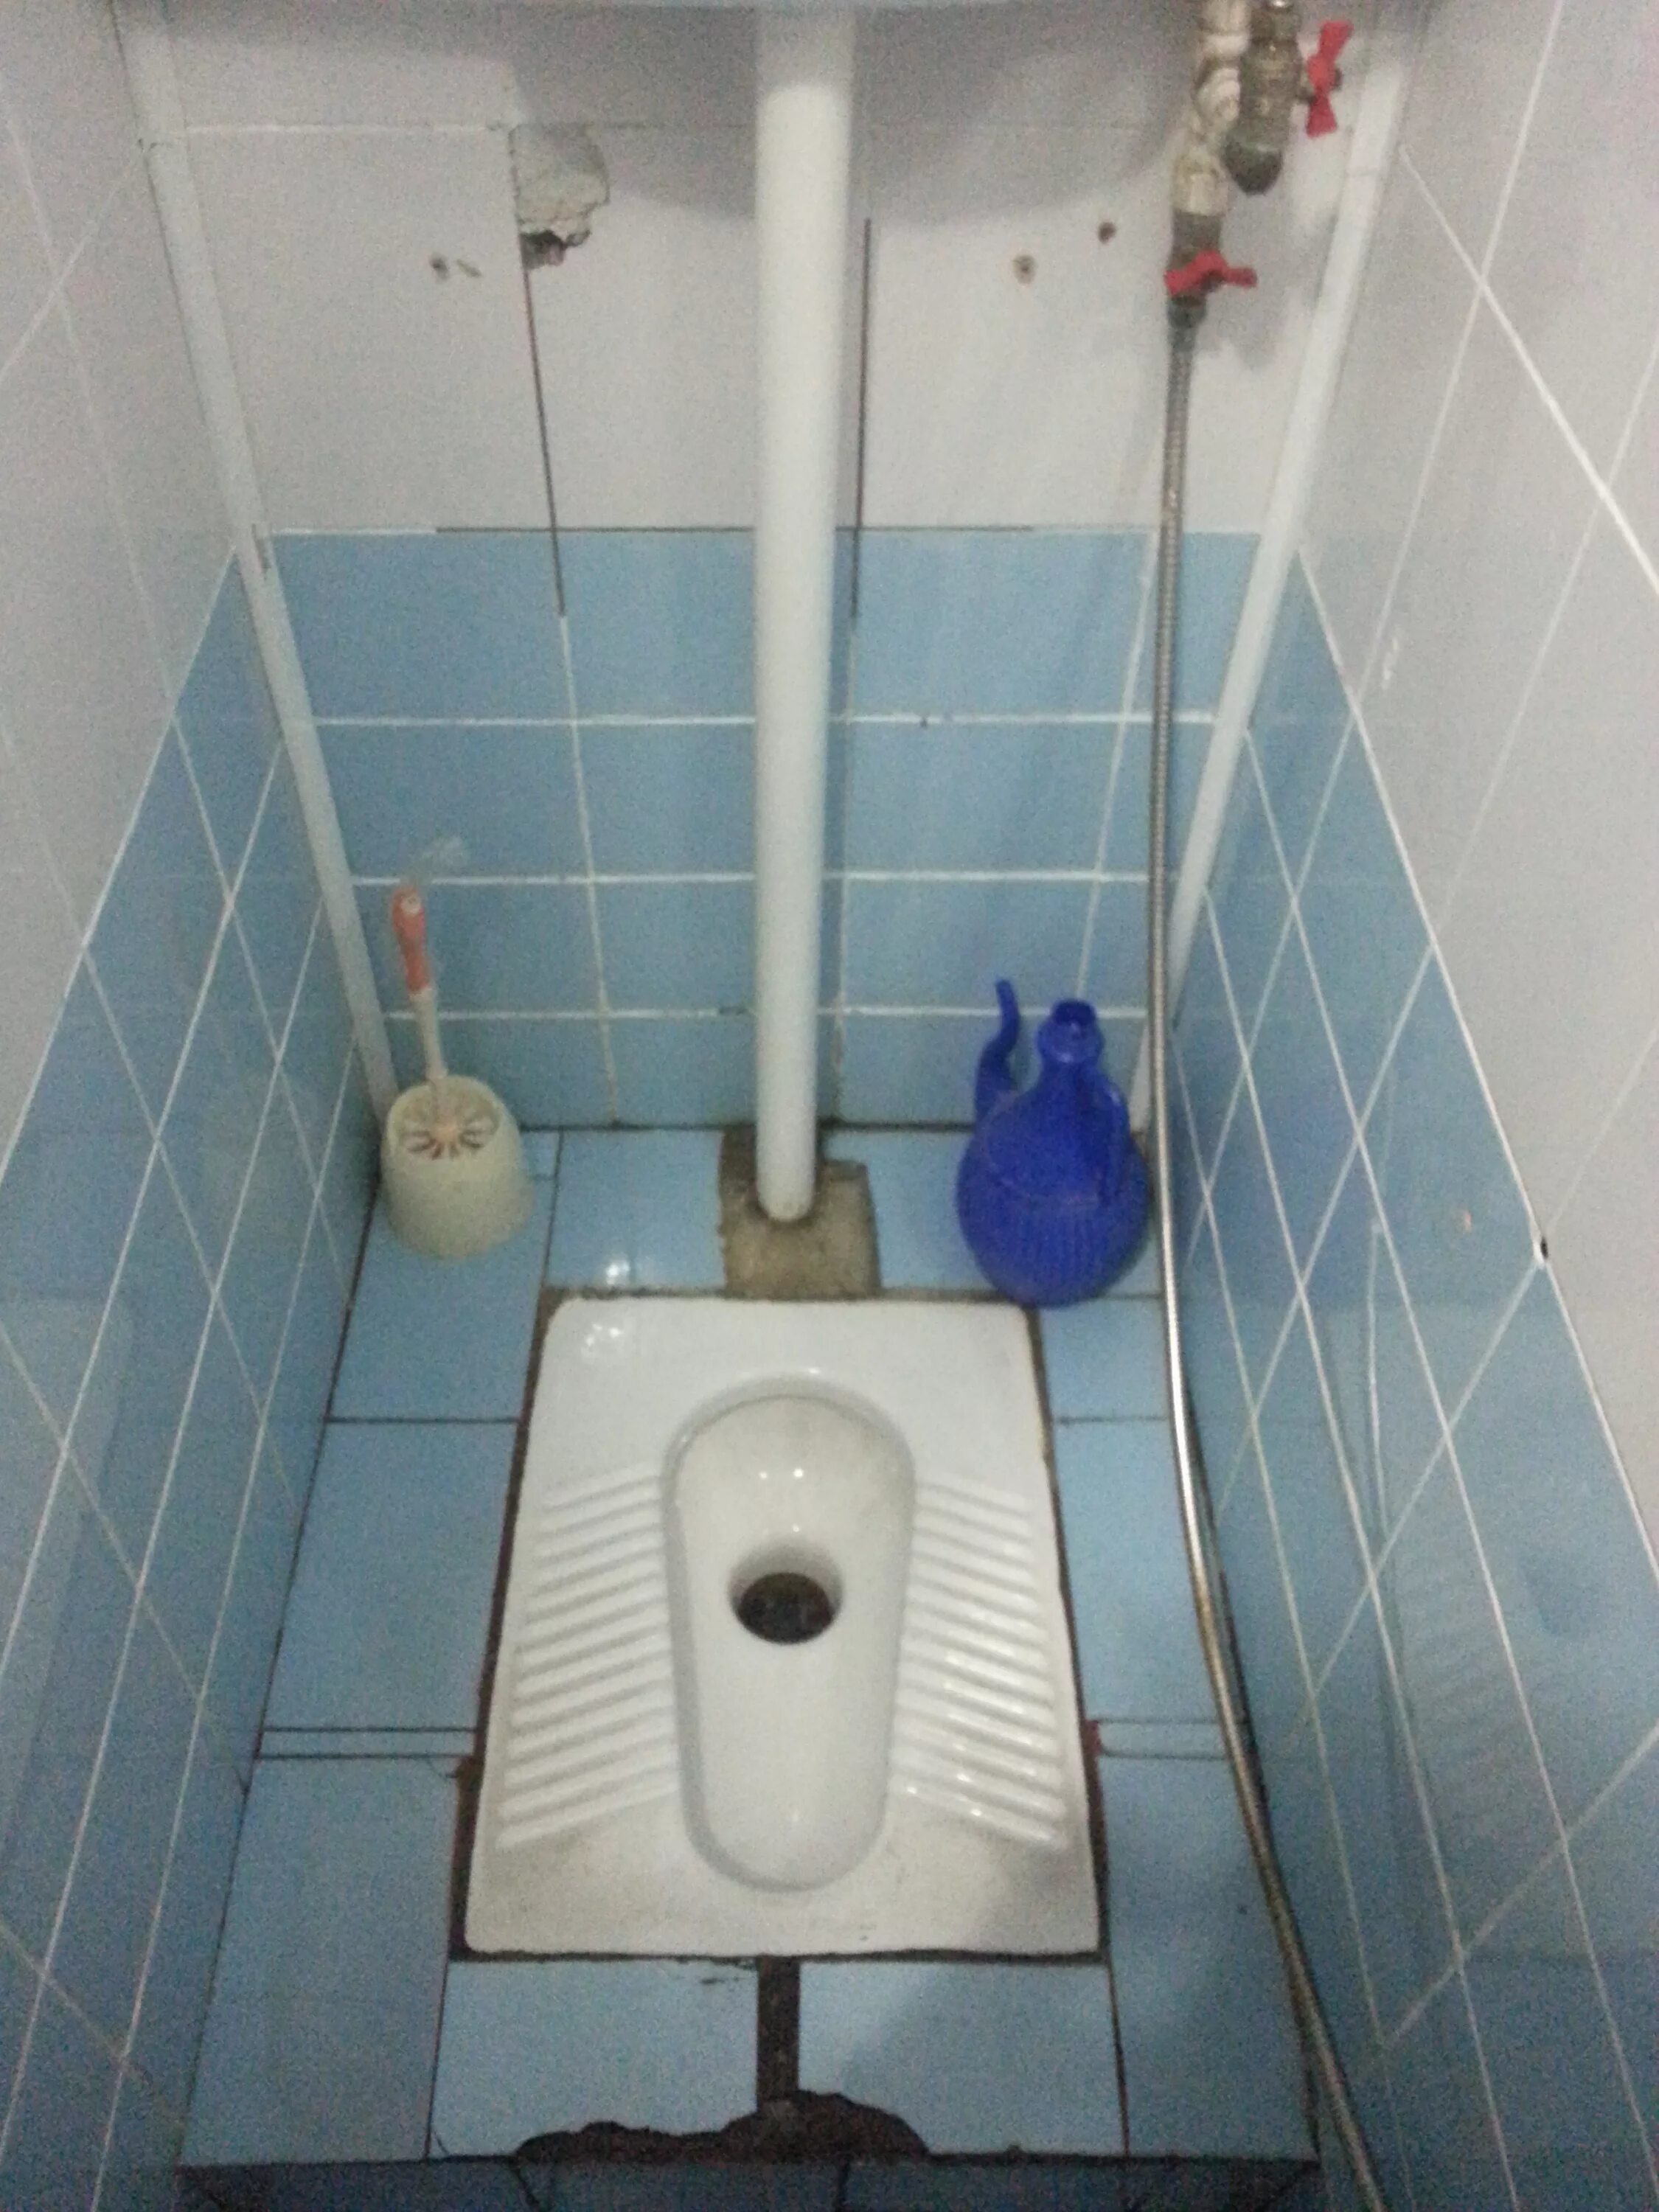 Мусульманский туалет. Унитаз в туалете. Унитаз для мусульман. Туалет без унитаза.